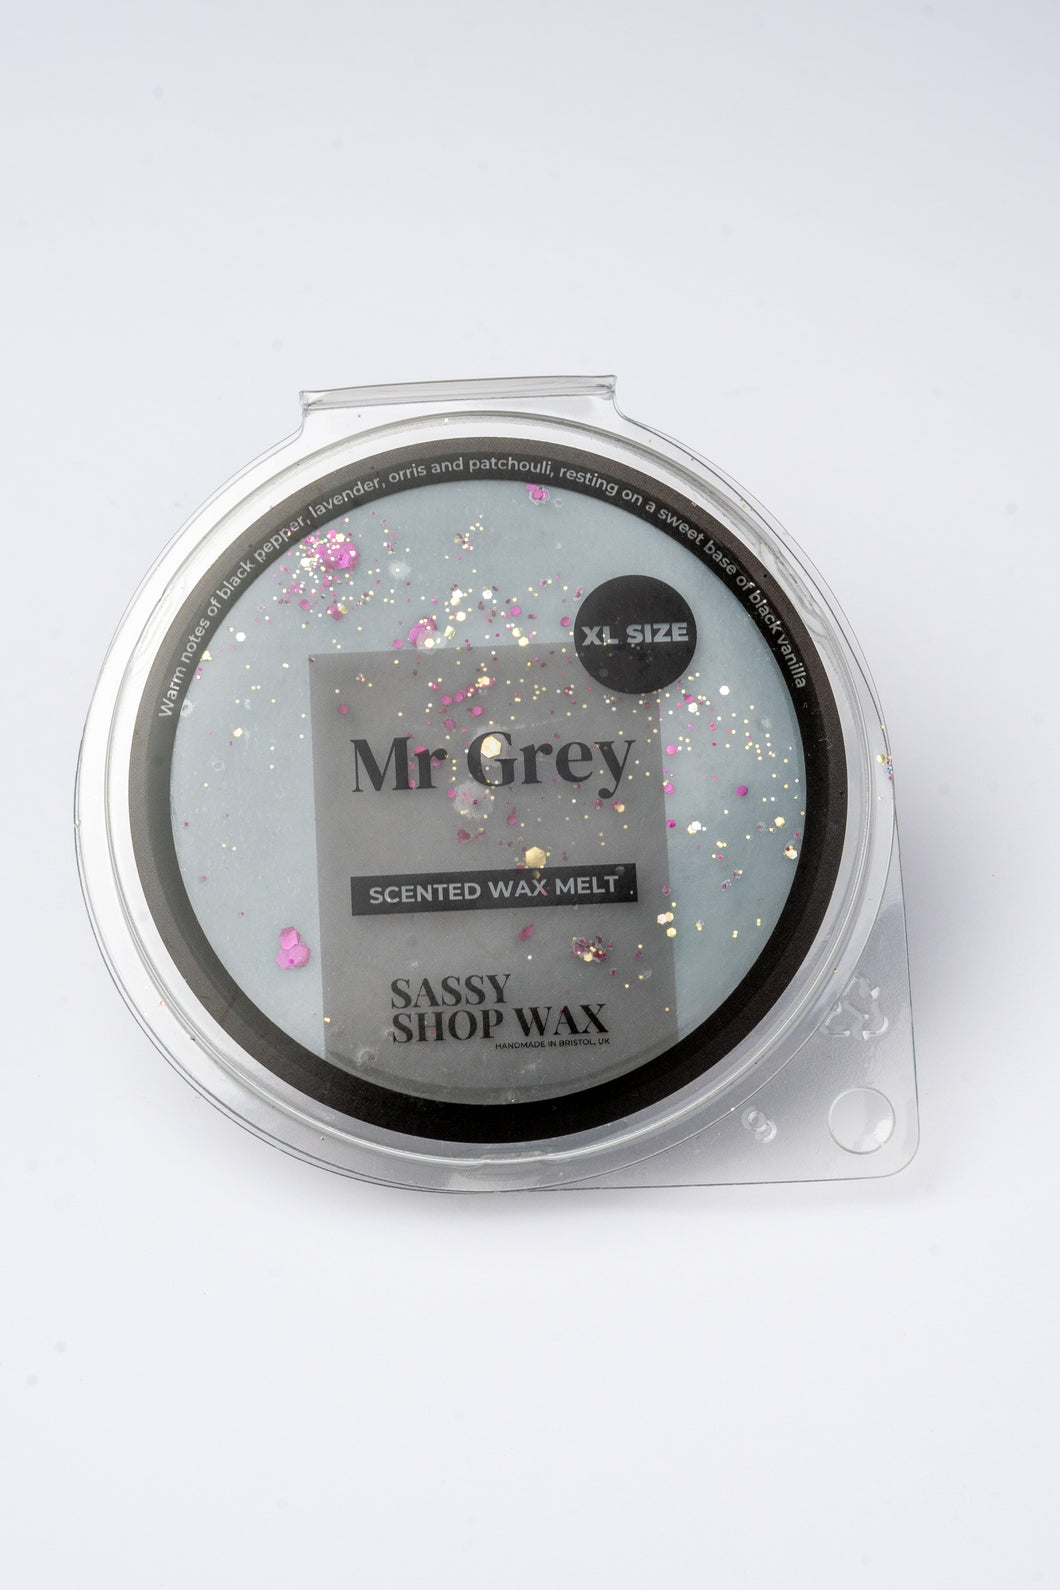 Mr Grey Wax Melt up